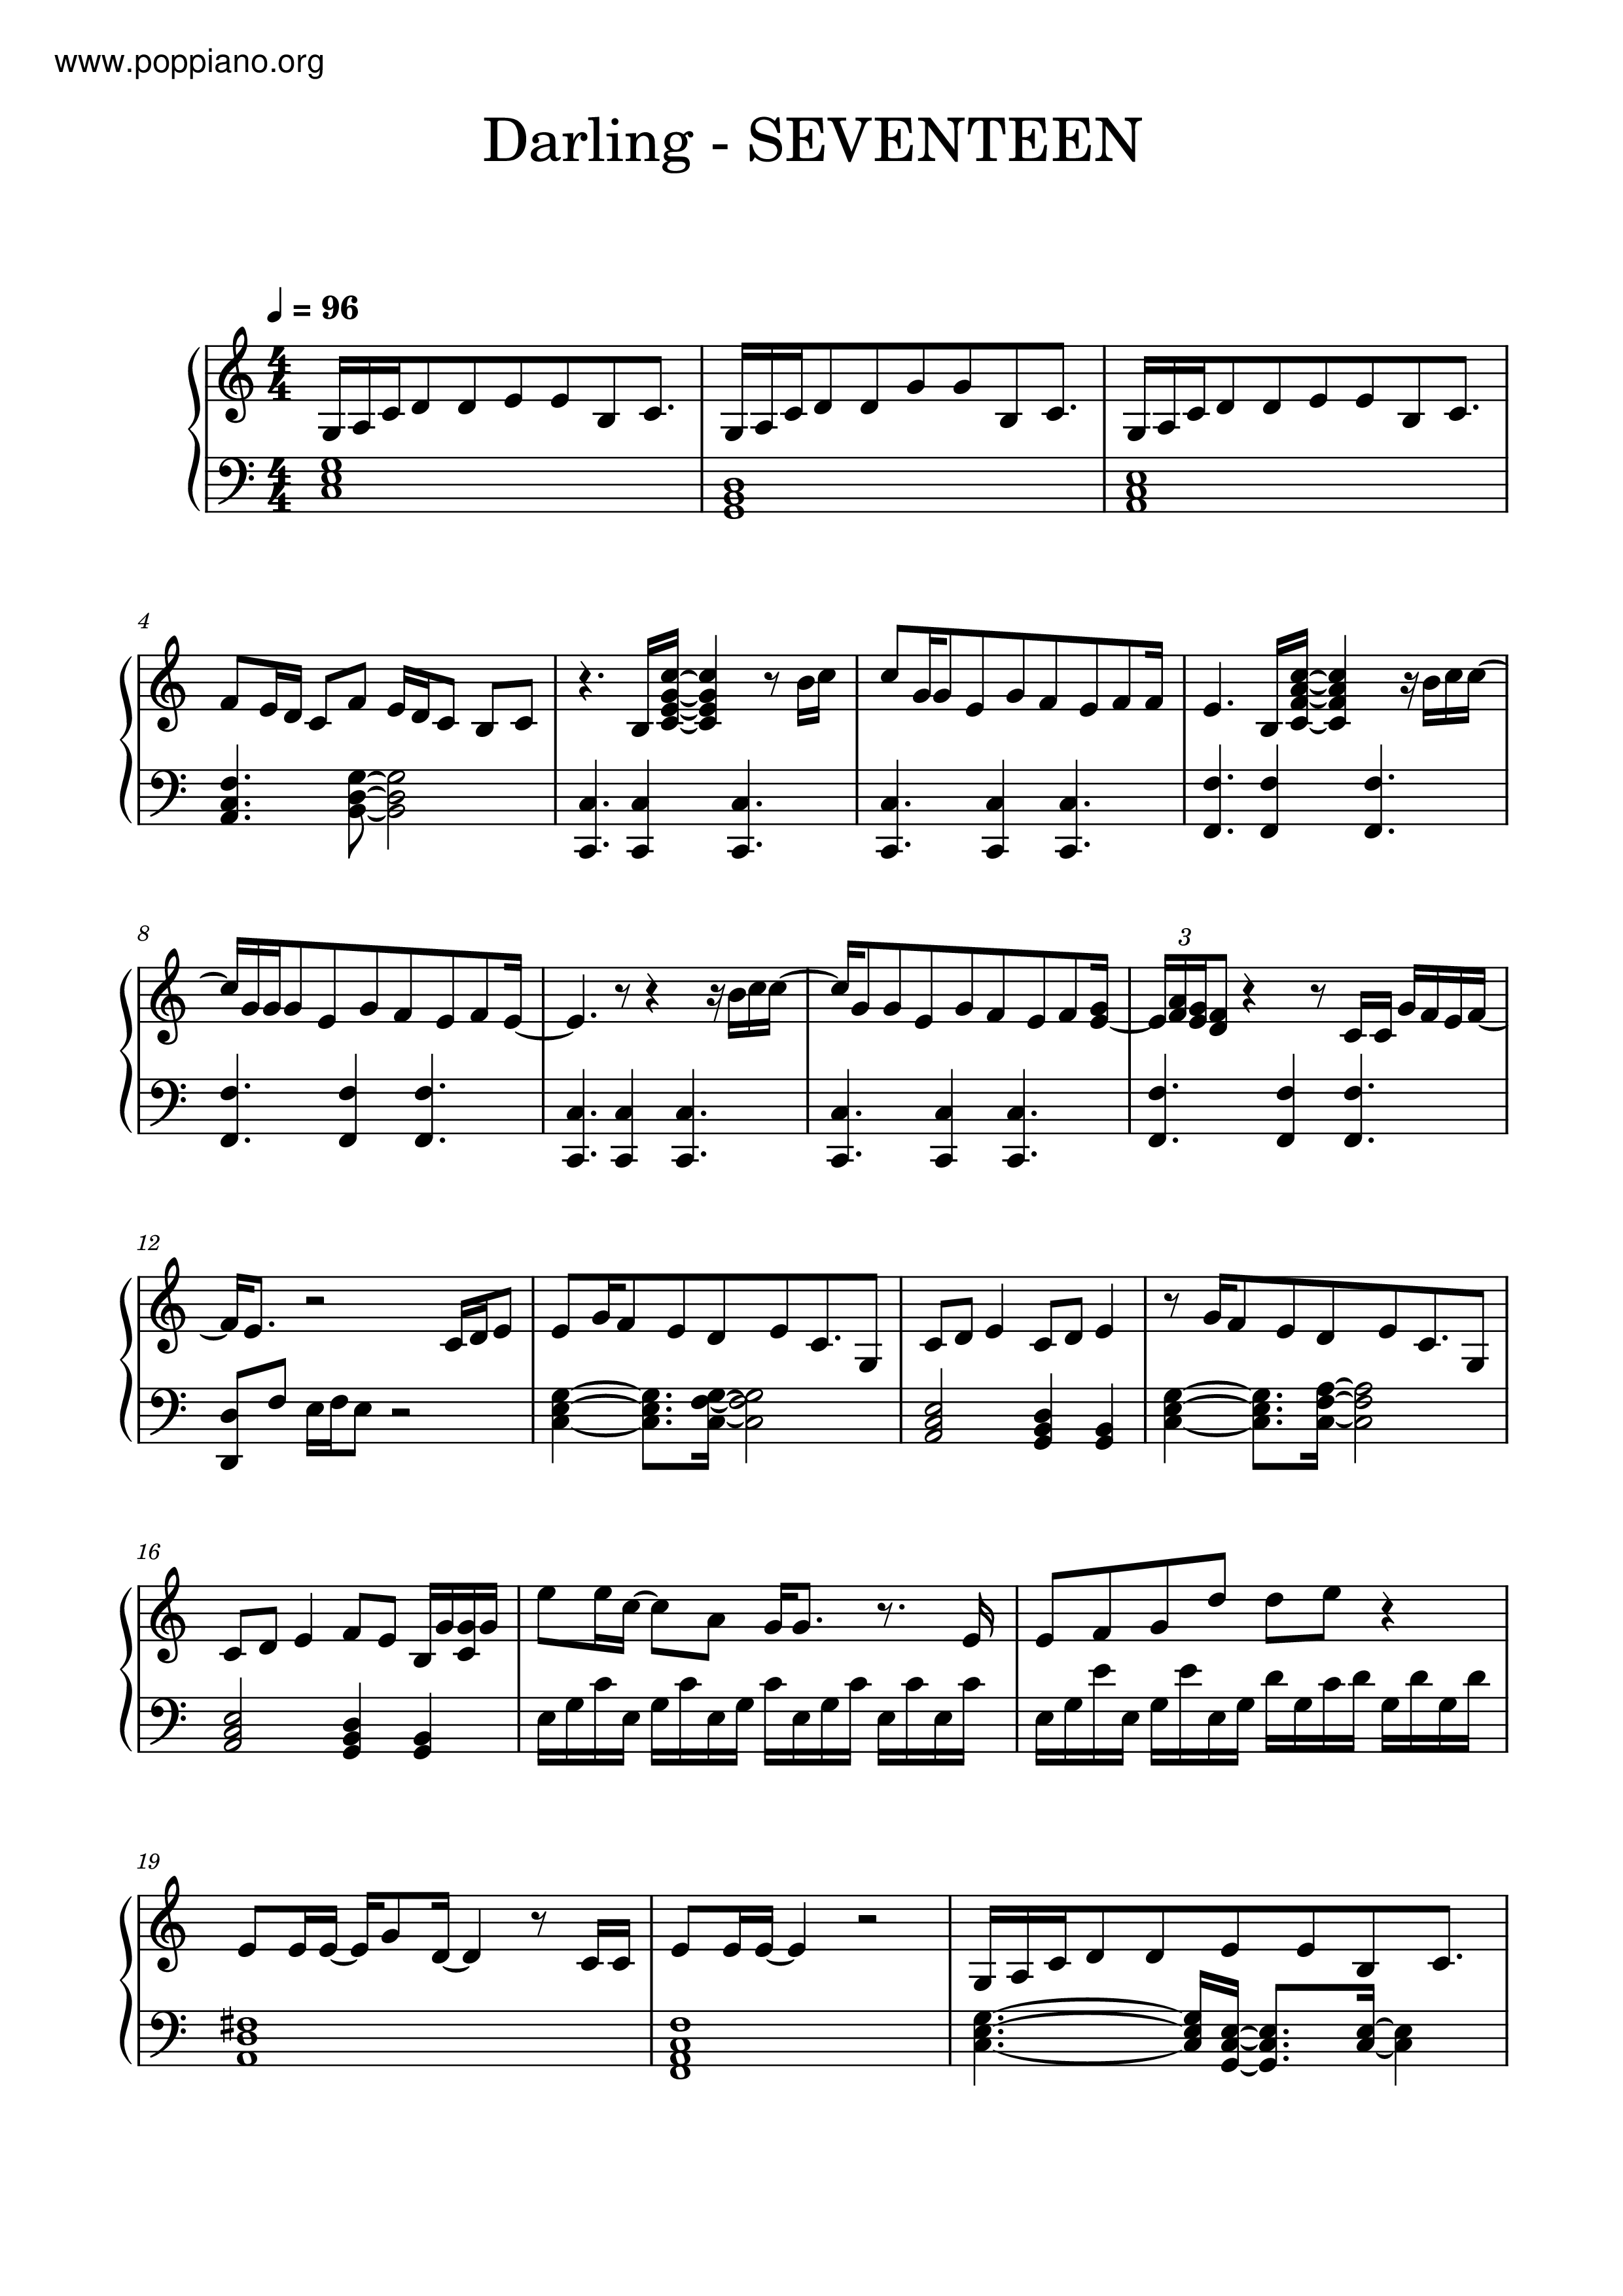 ☆SEVENTEEN - Darl+ing ピアノ譜pdf- 香港ポップピアノ協会 無料PDF ...